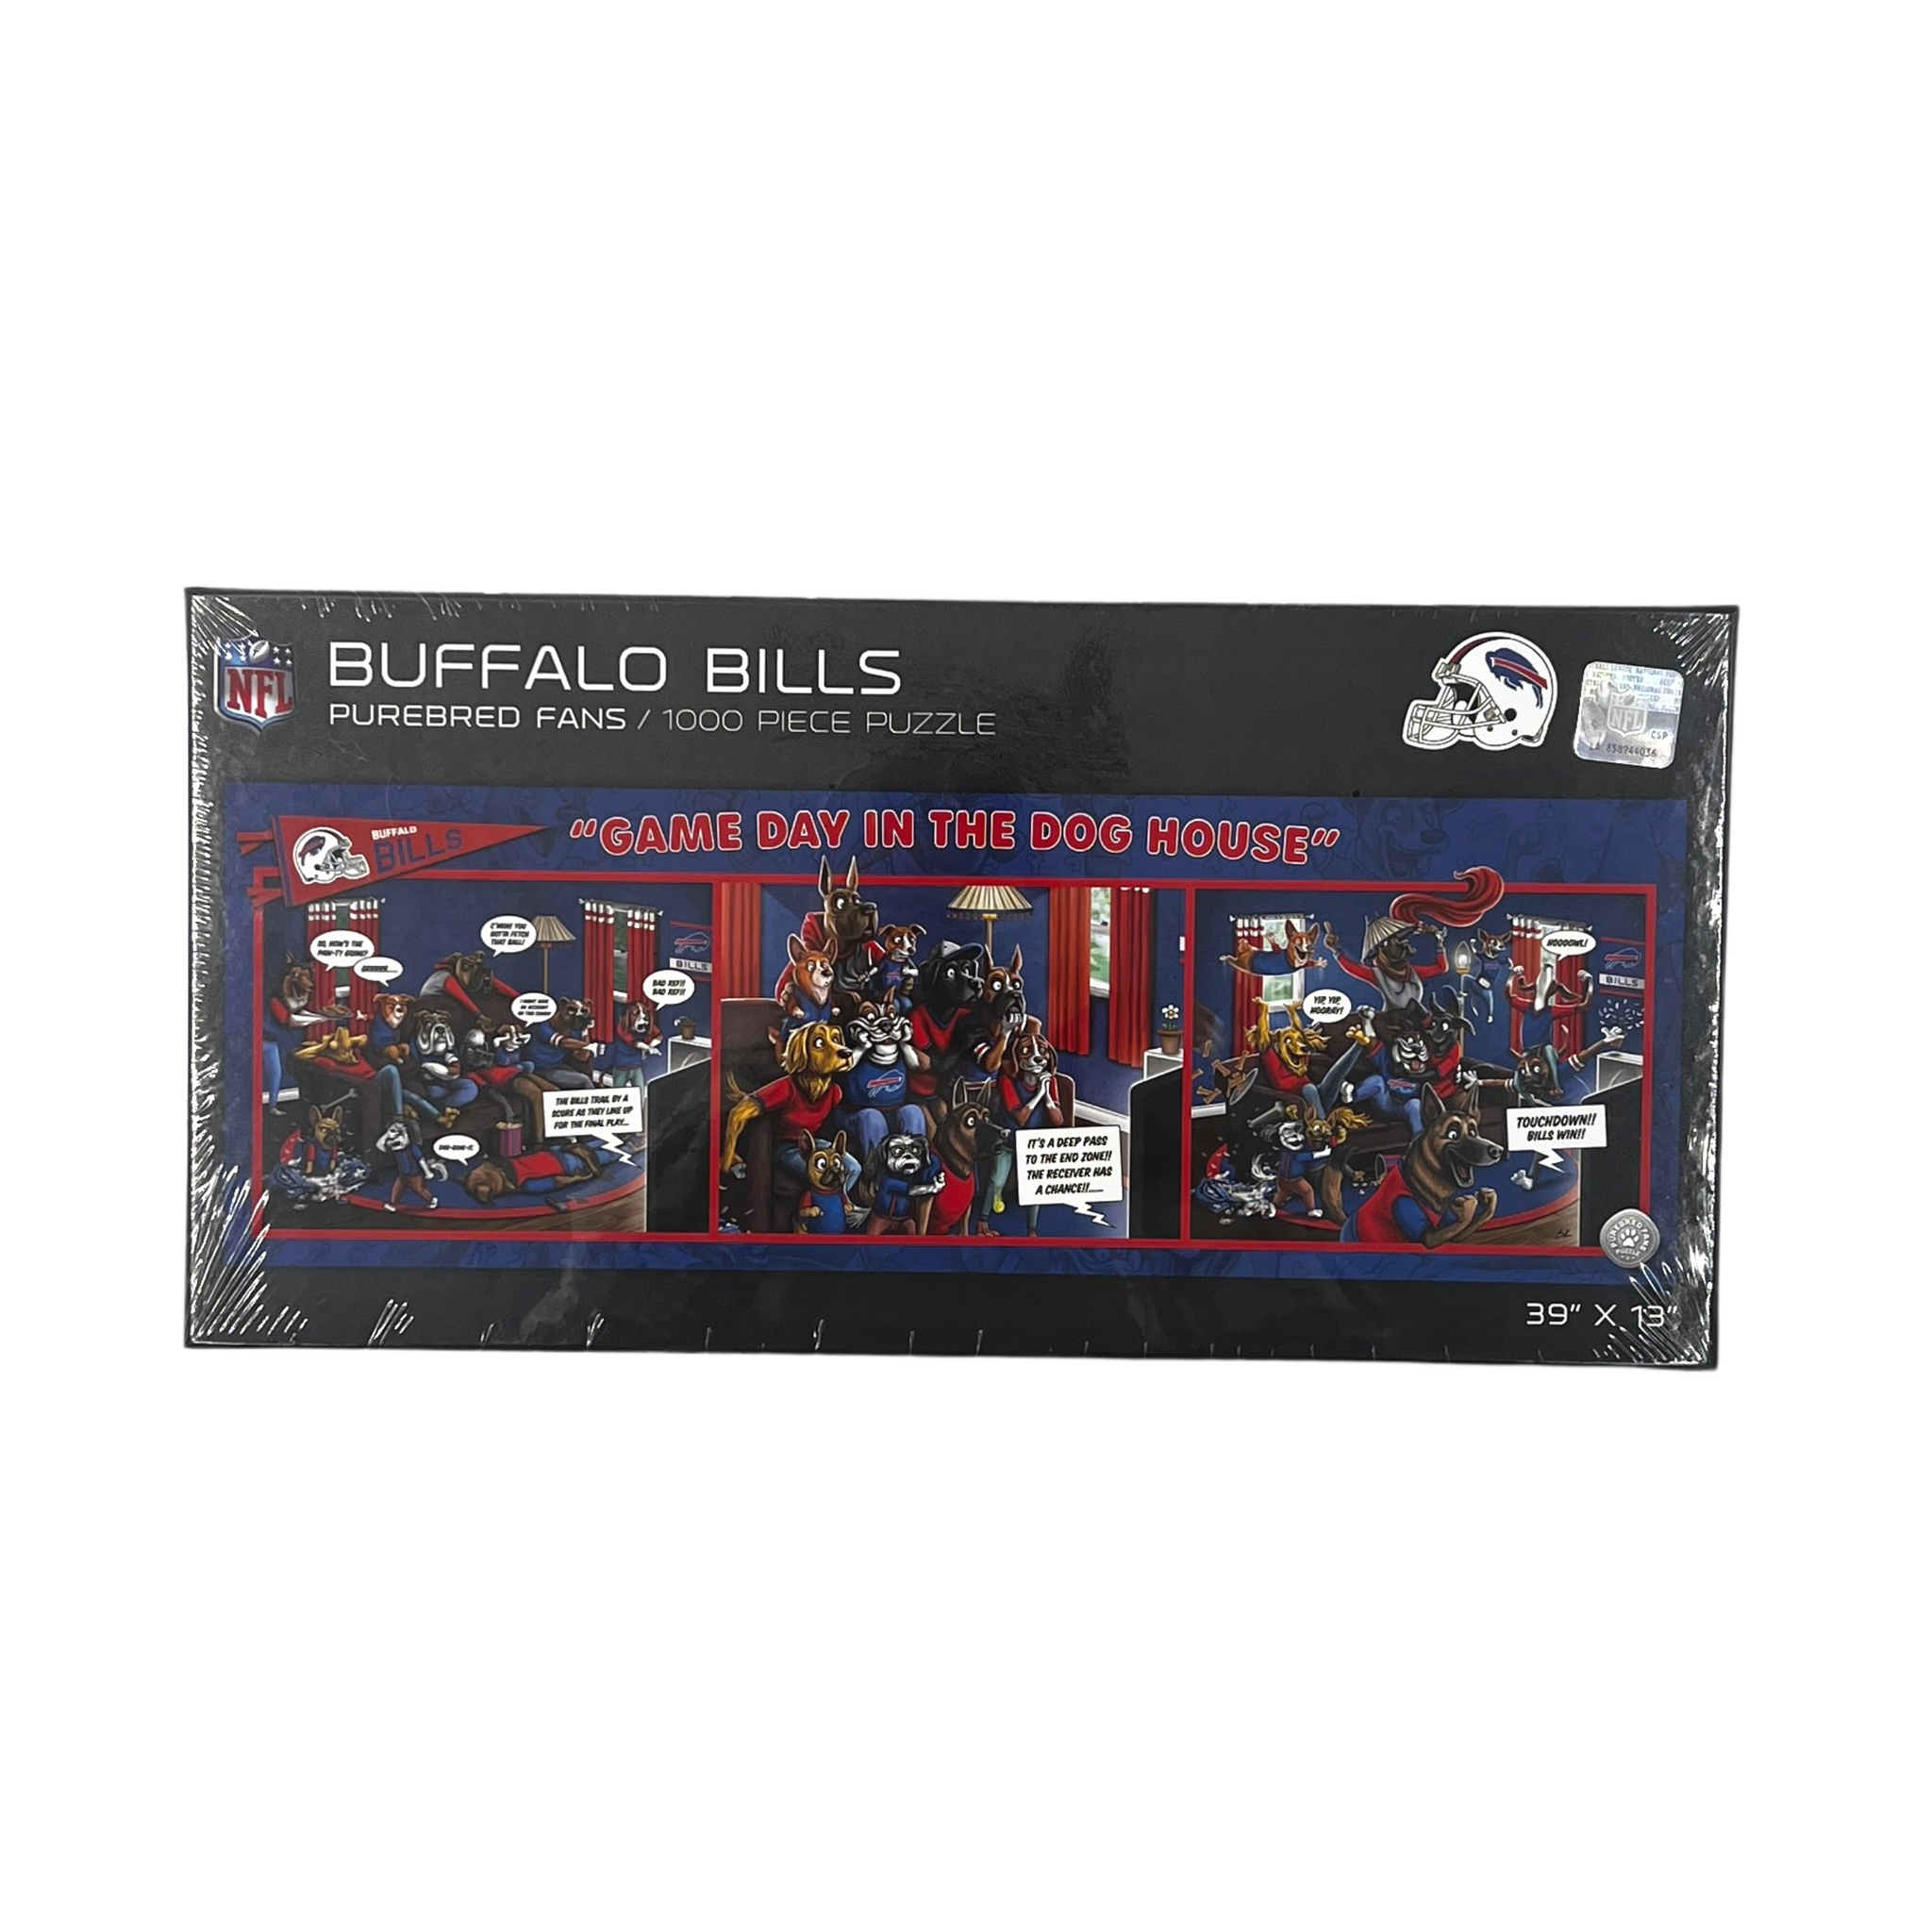 Buffalo Bills Purebred Fans Puzzle